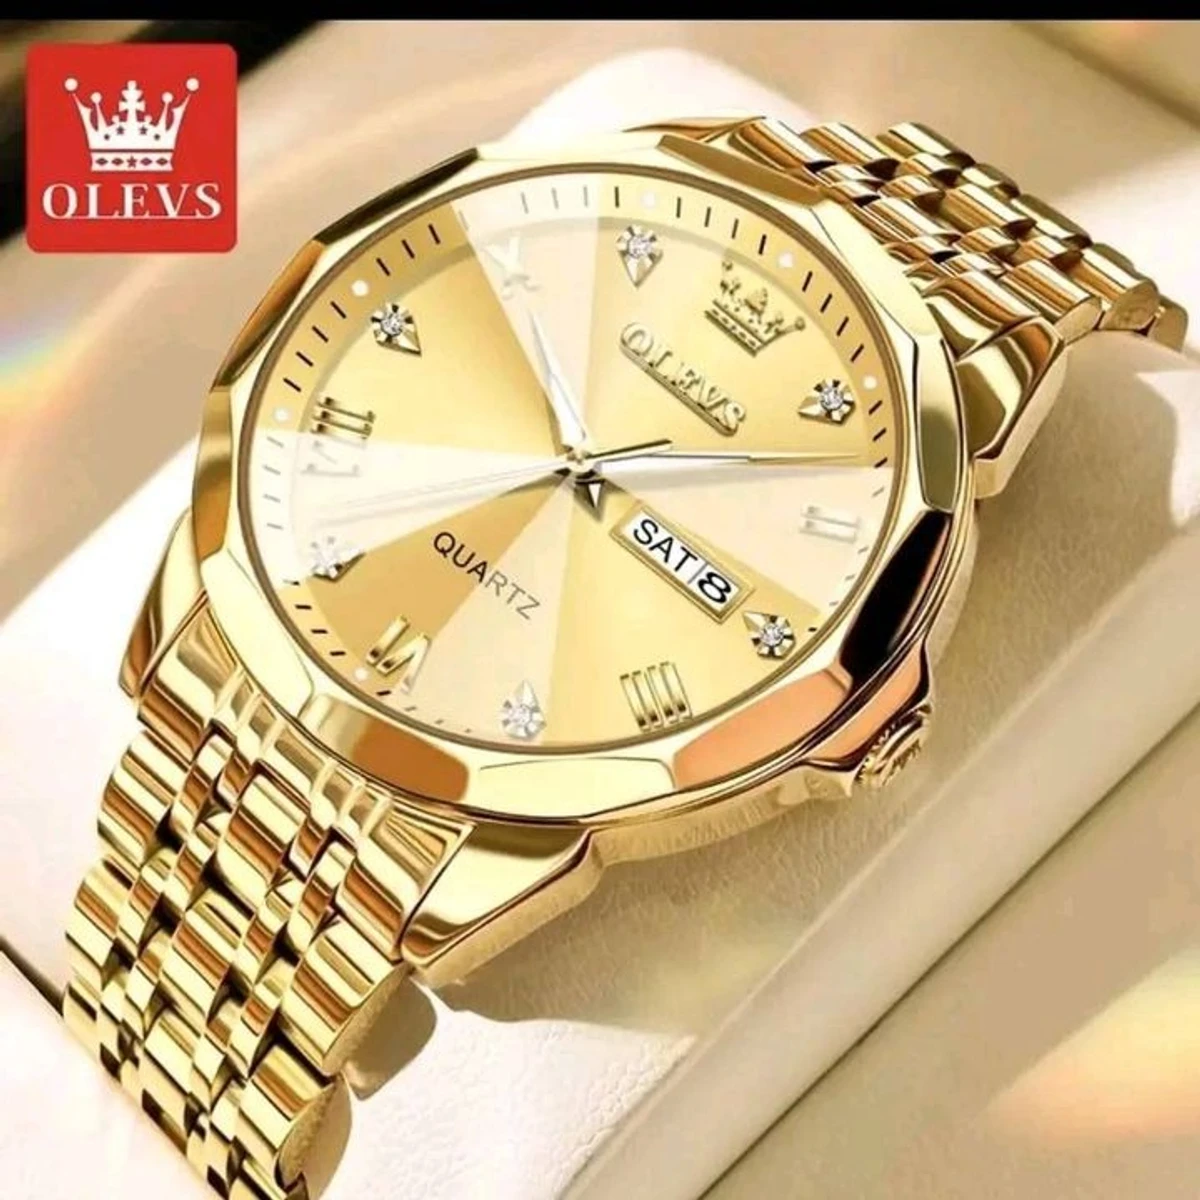 OLEVS MODEL 9931 Watch for Men Stainless Steel Watches - 9941 FULL GOLDEN- MAN WATCH - LOCK PUSH